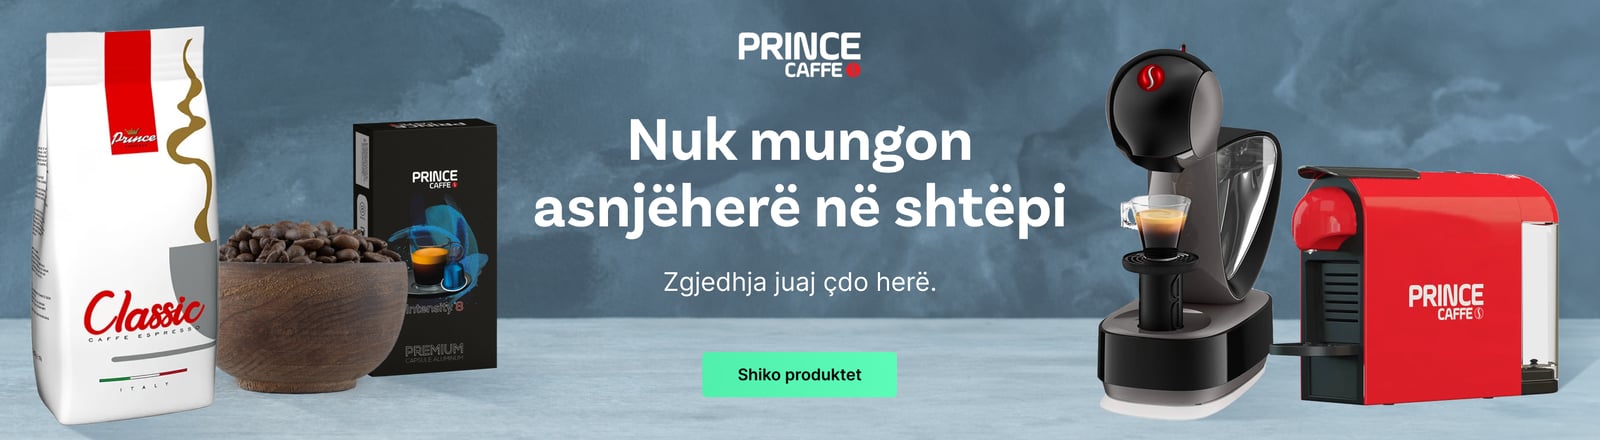 Banner-prince-caffe-web